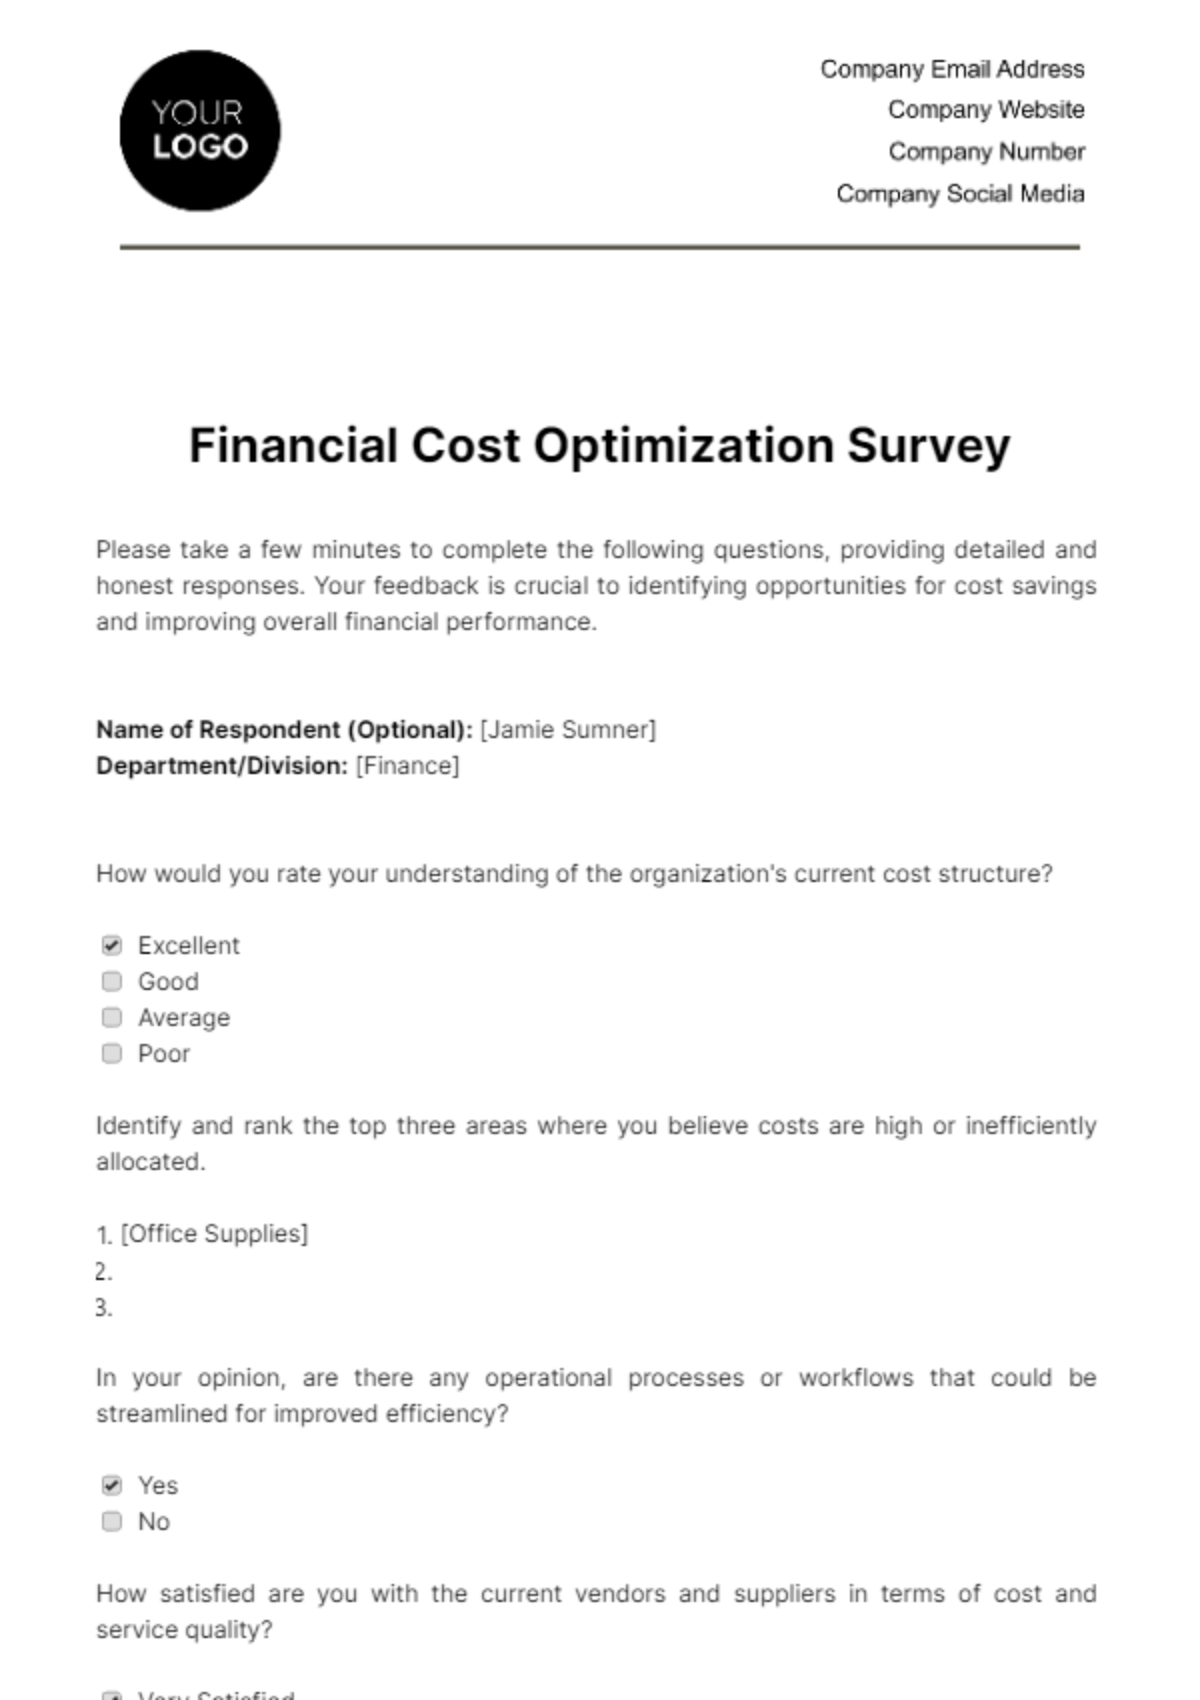 Financial Cost Optimization Survey Template